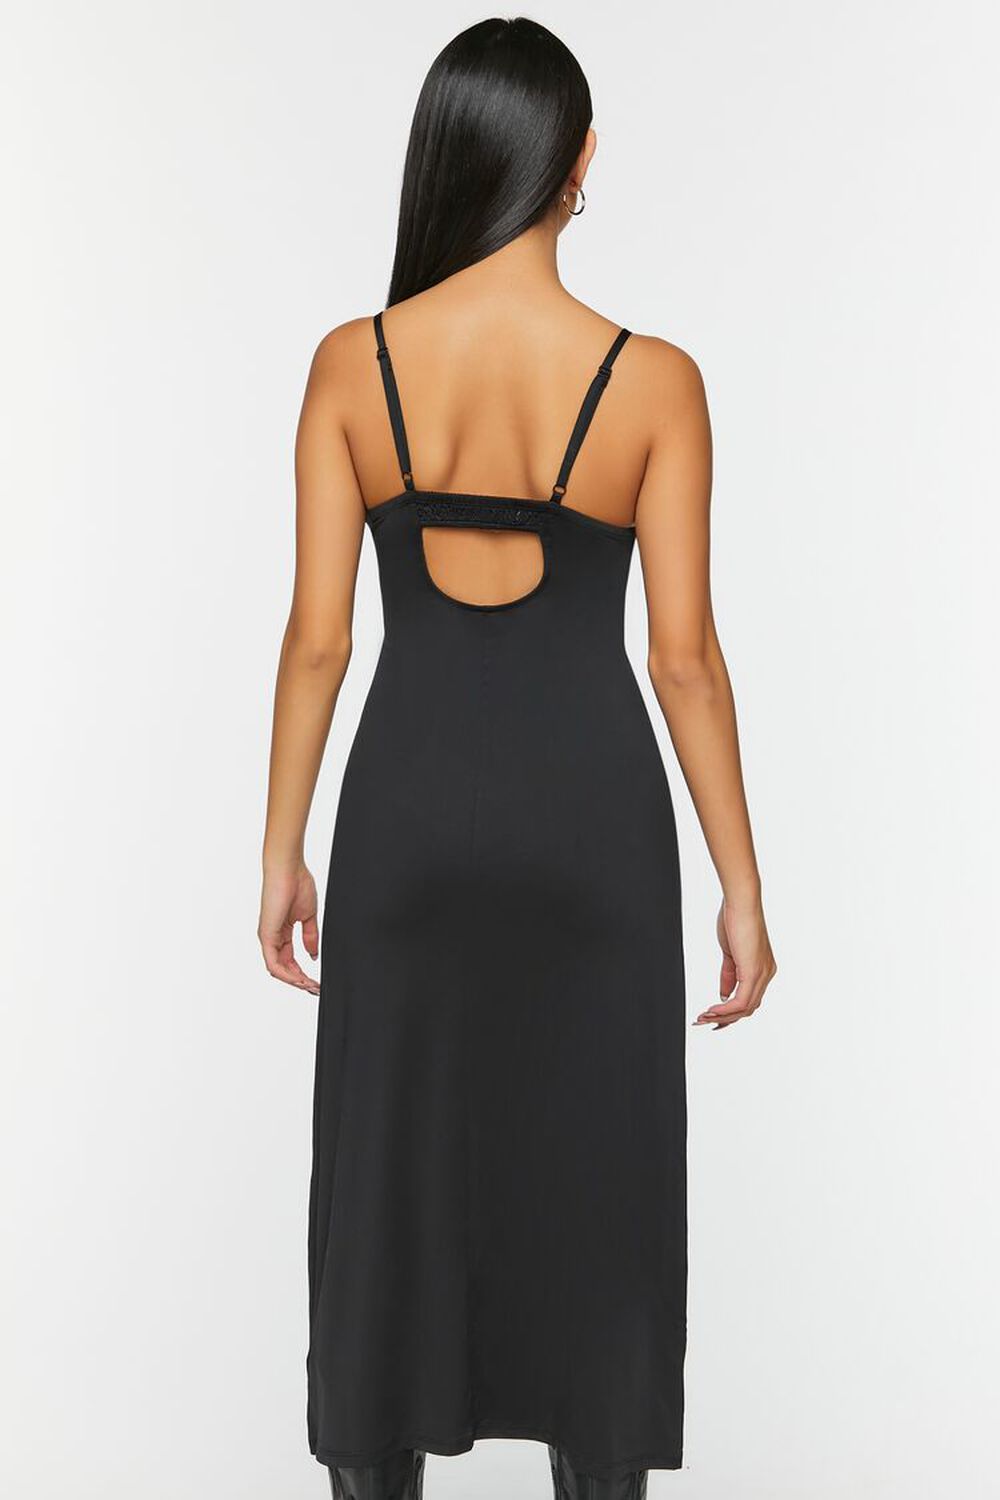 Reviena Midi Dress - Cut Out Cowl Neck Dress in Black